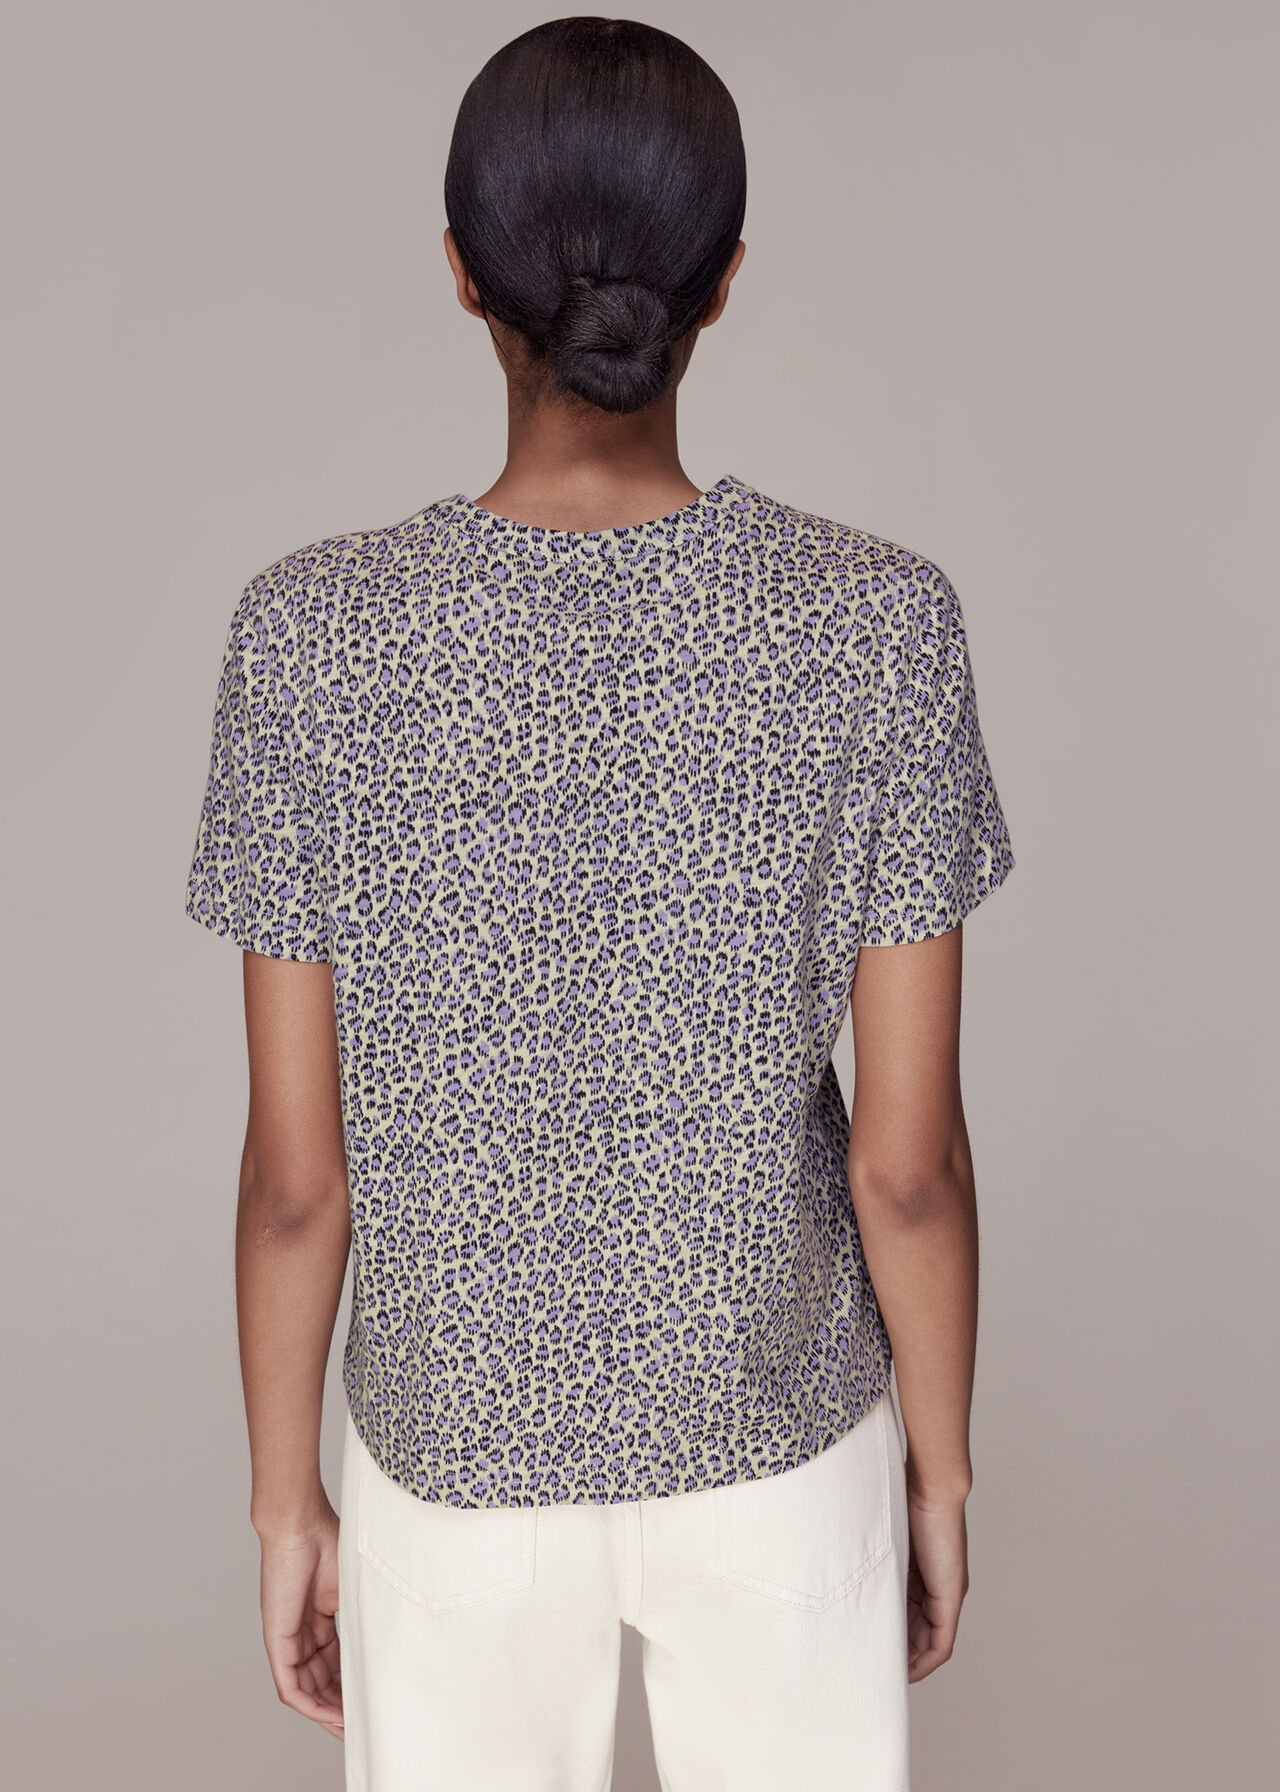 Dashed Leopard Print T-Shirt